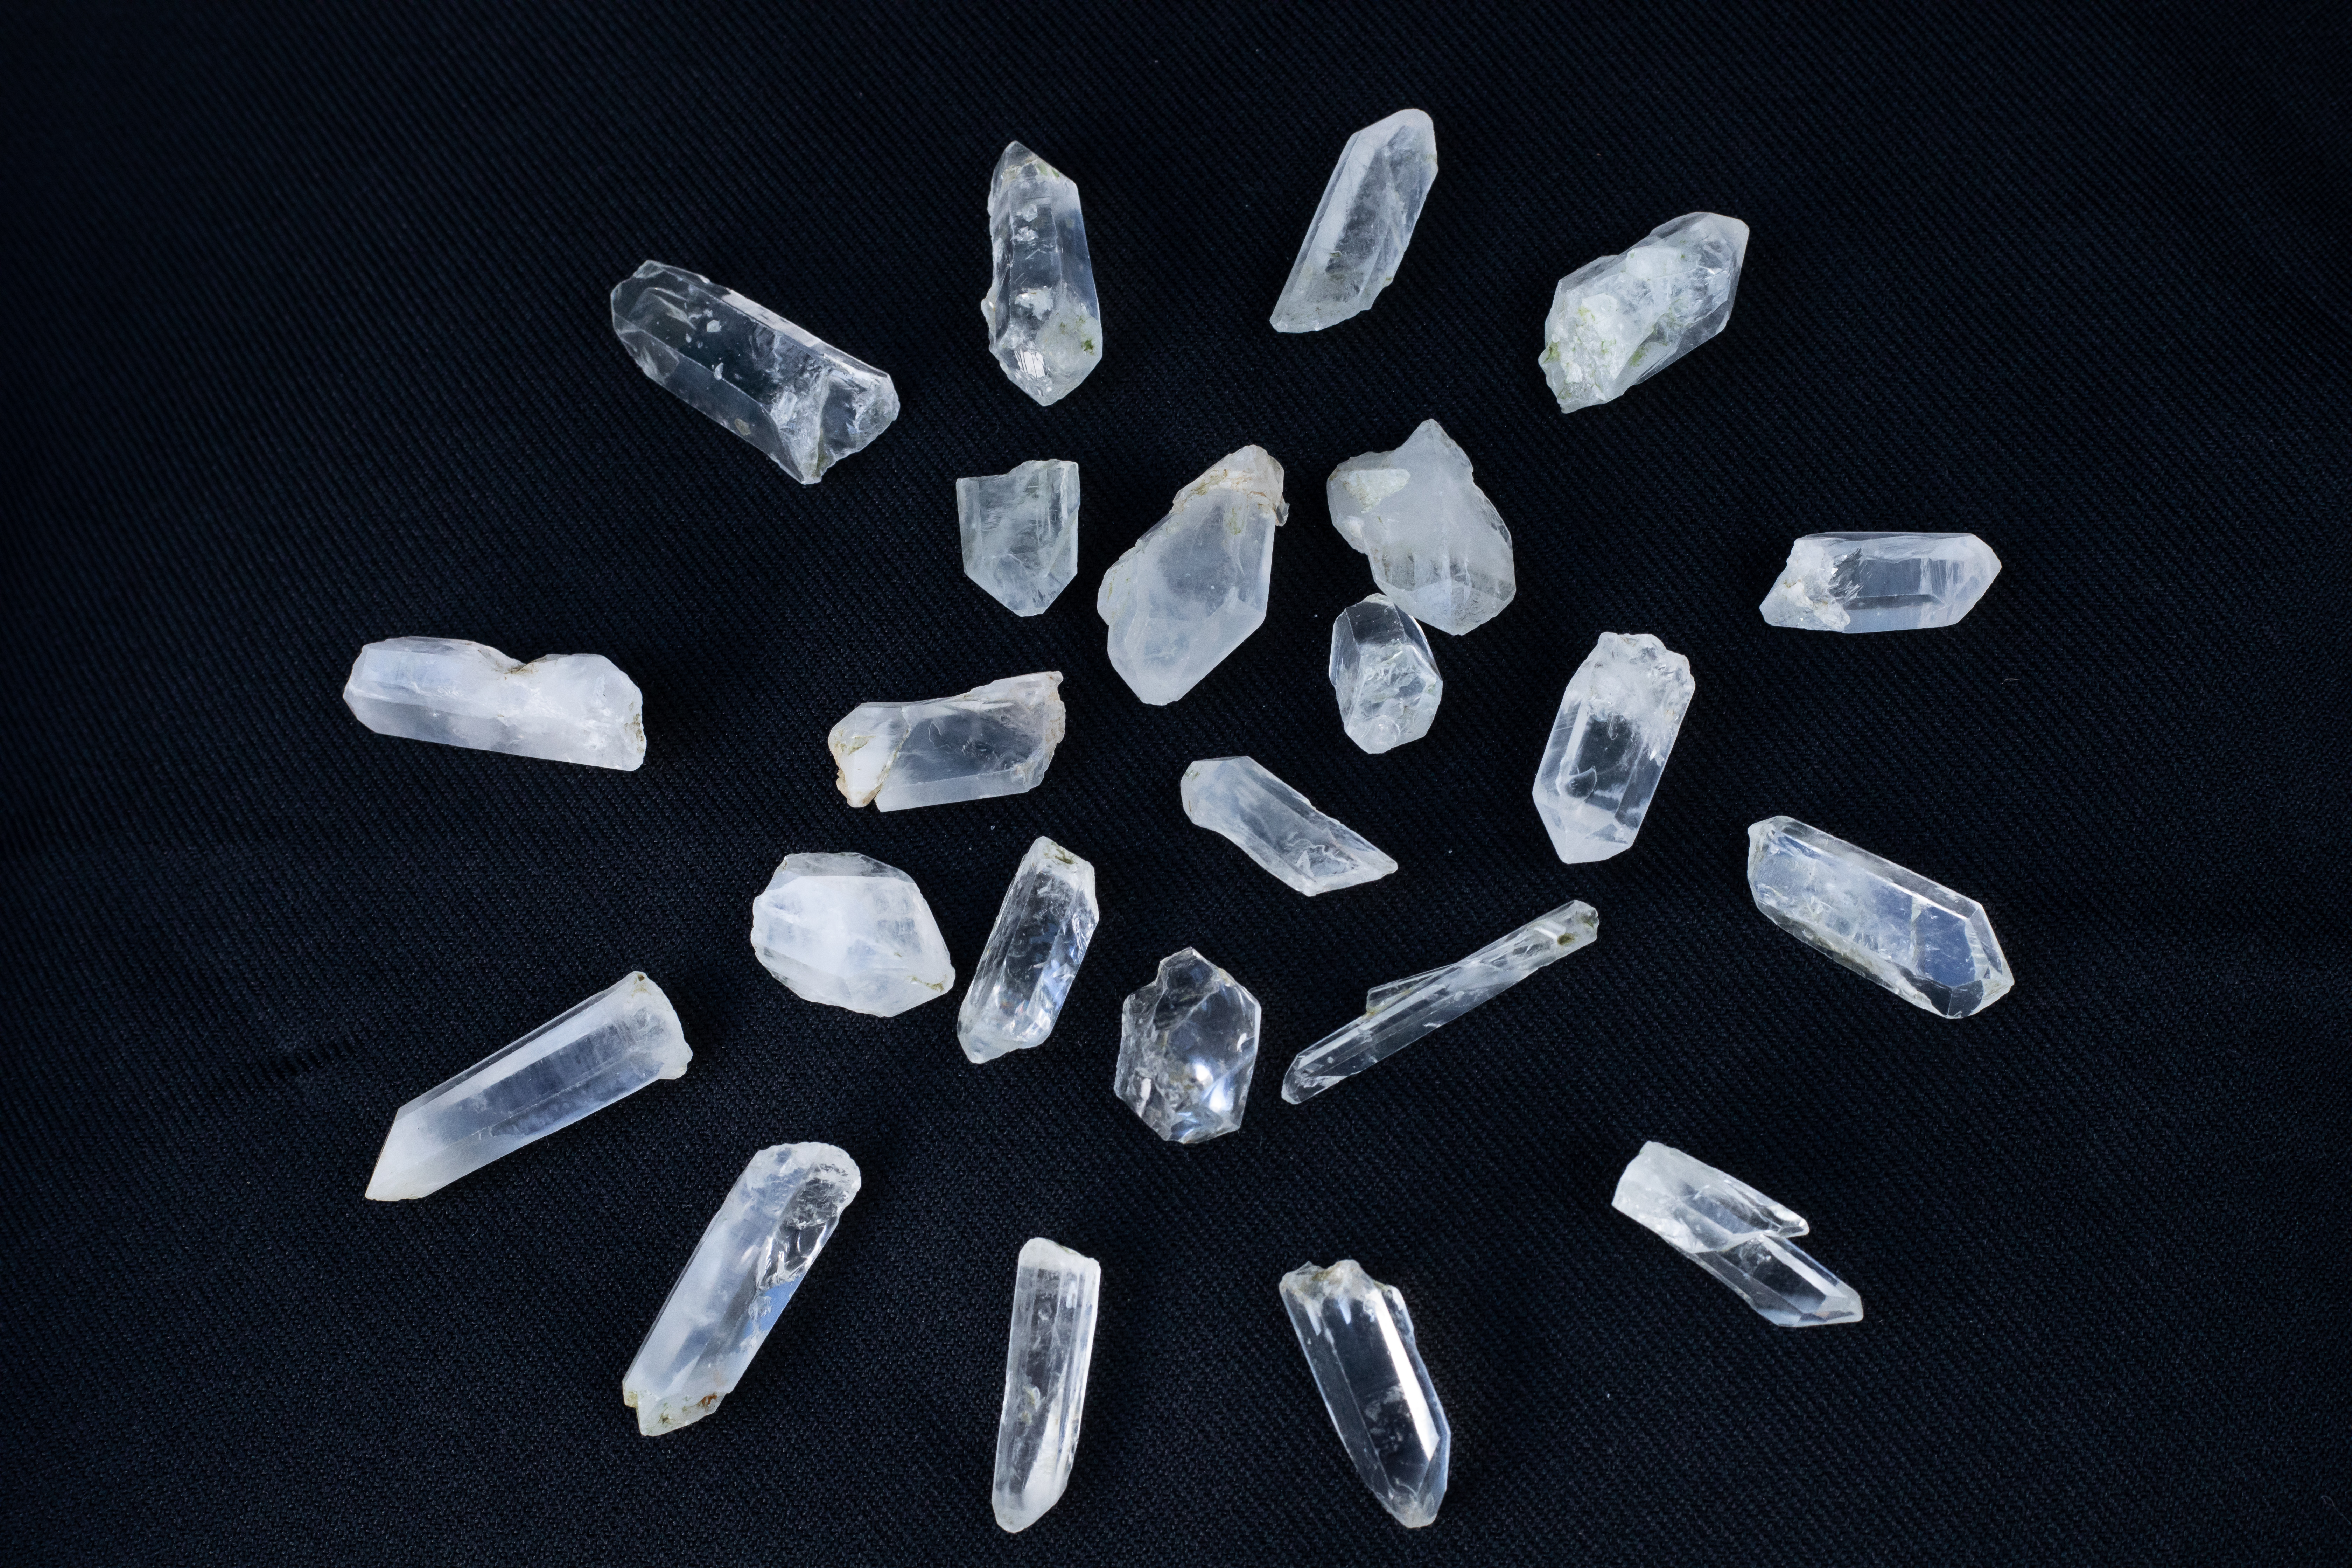 Crystal Chards White Stones – THUMMUM Rev.2 vs 17. Donation $111.11